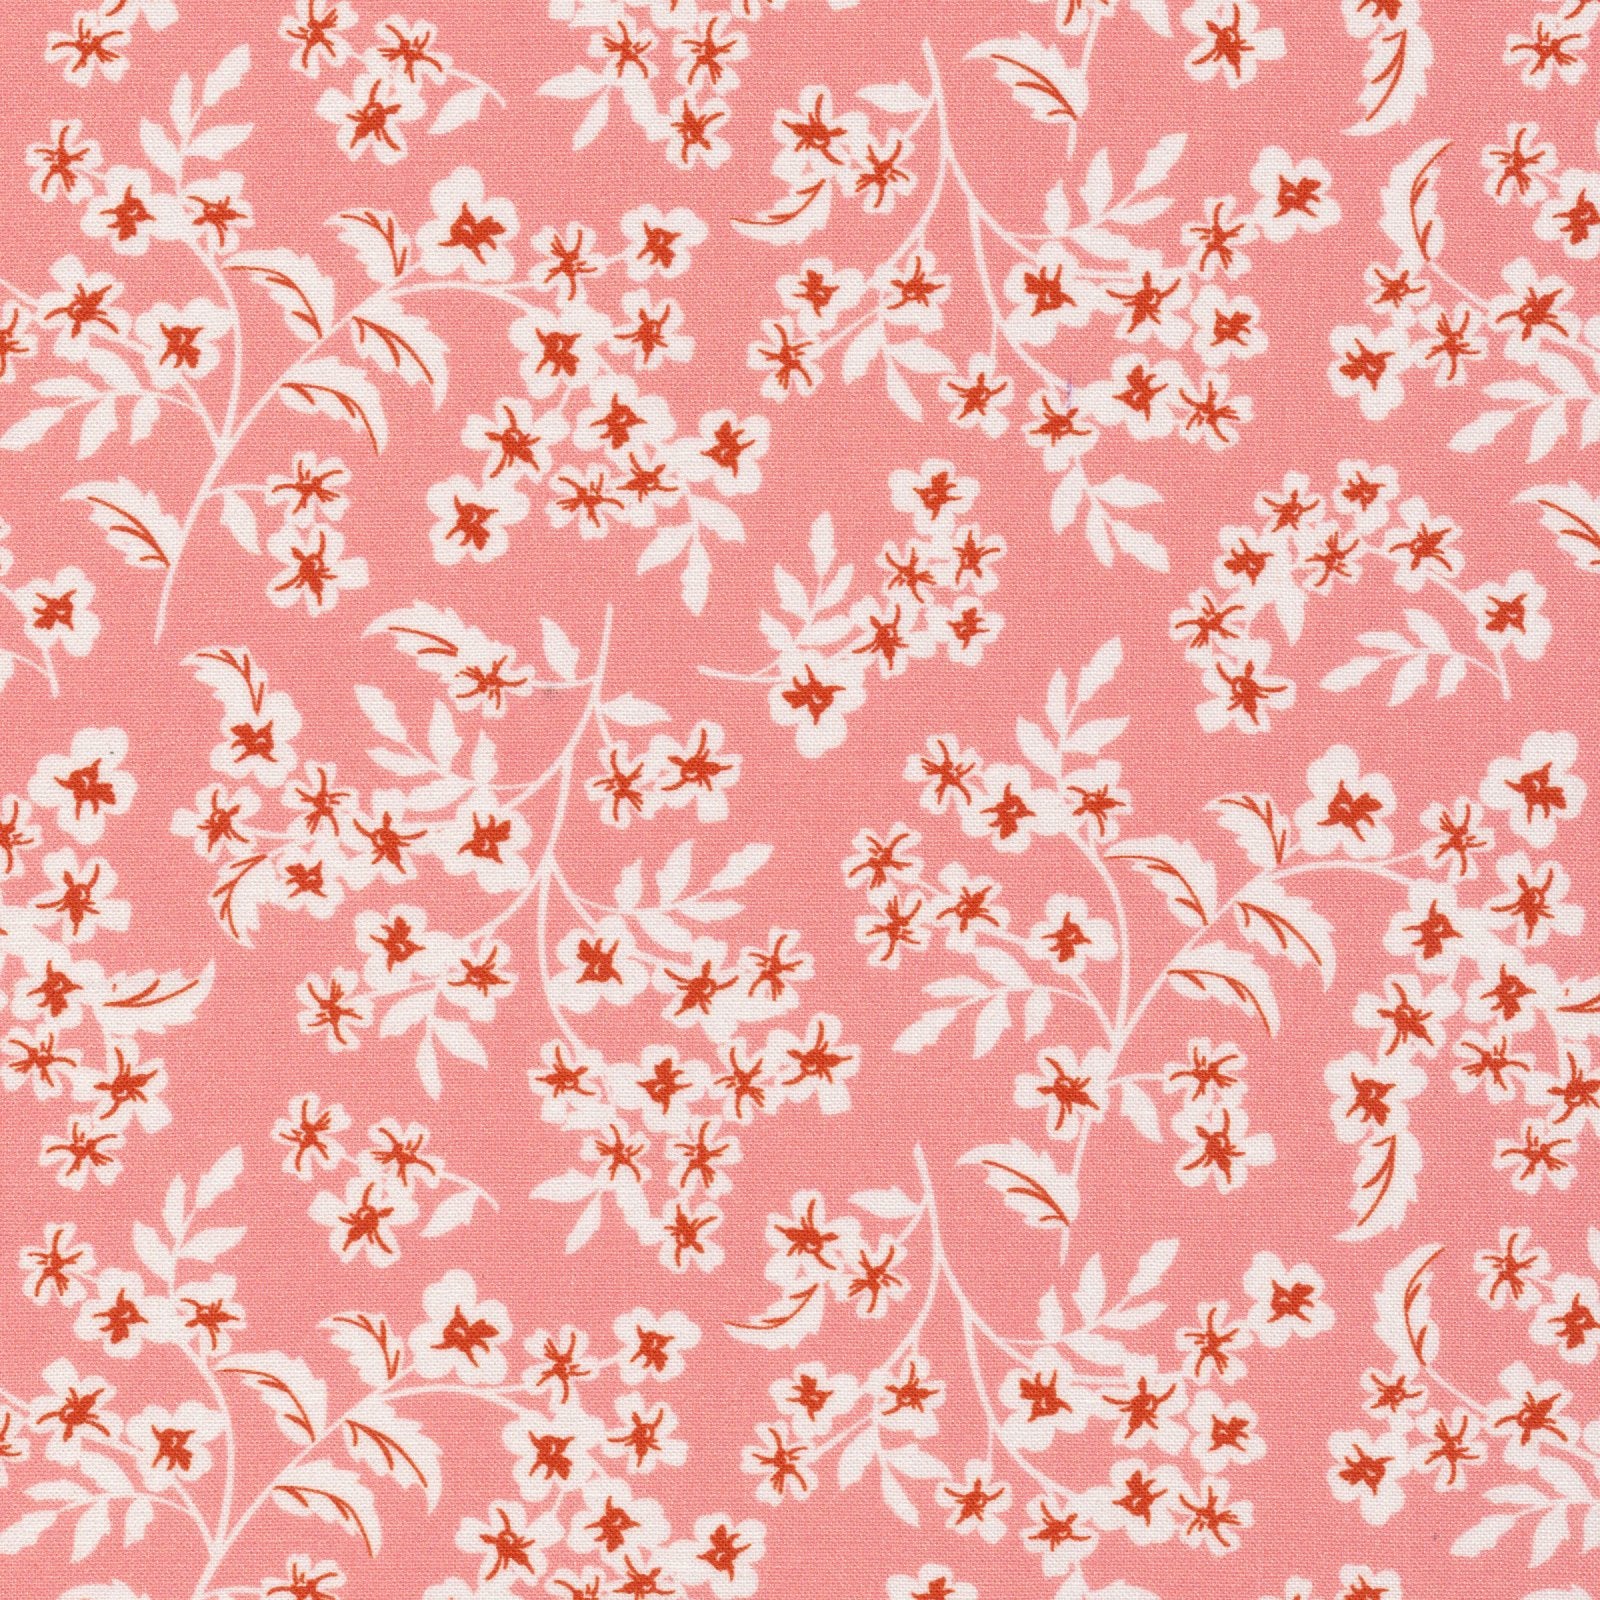 Elodie - Flower Garden - Hang Tight studio - Cloud9 Fabrics - 1/2 yard